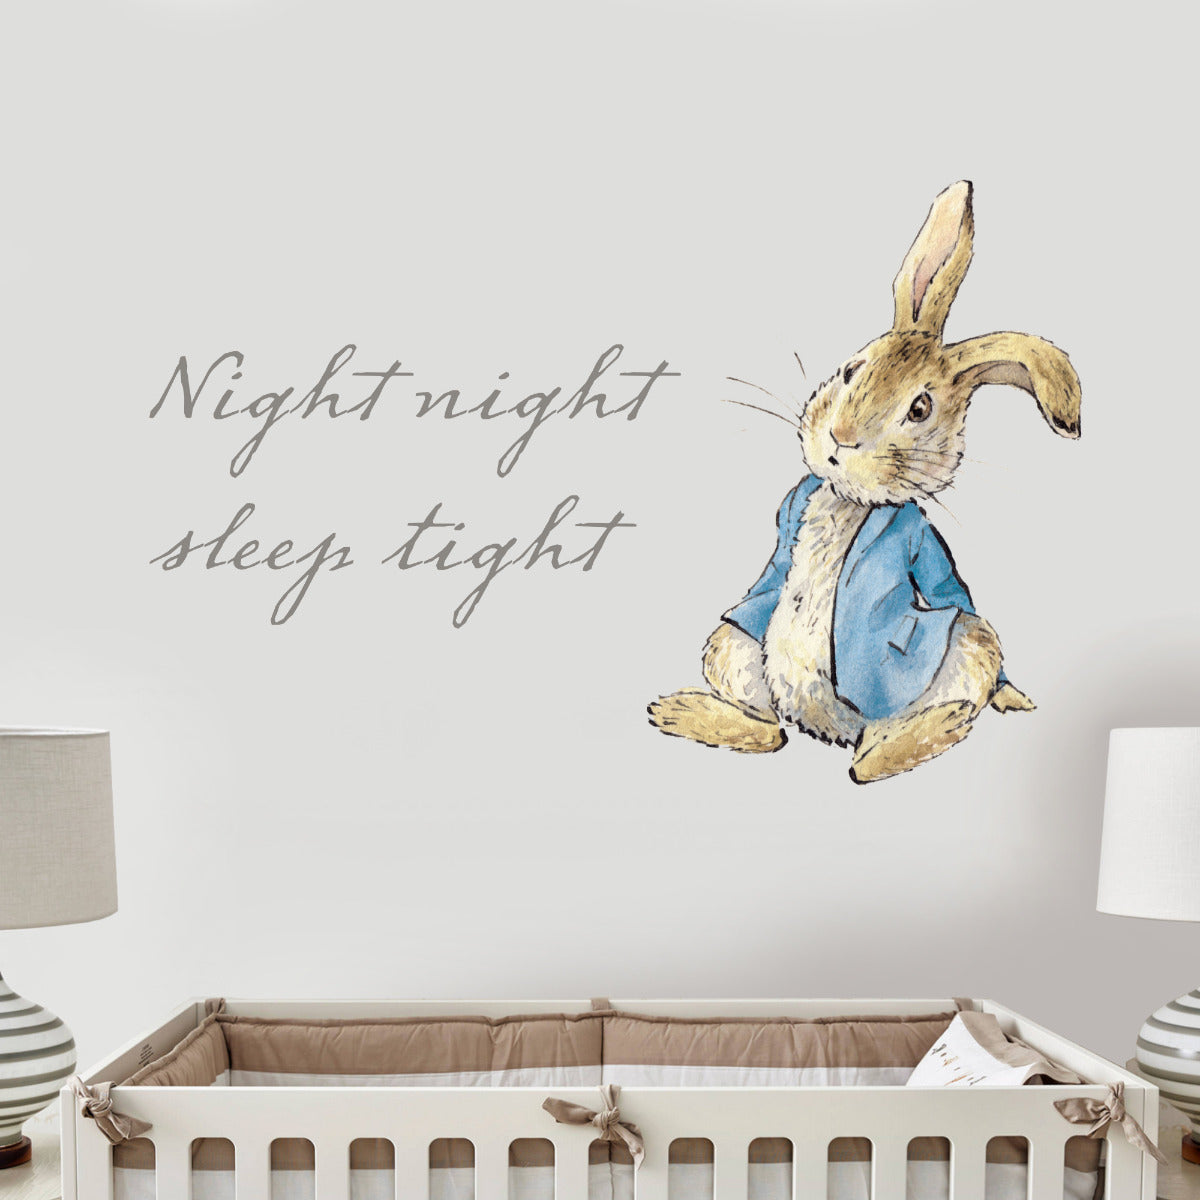 Peter Rabbit Sitting Down Night Night Sleep Tight Wall Sticker